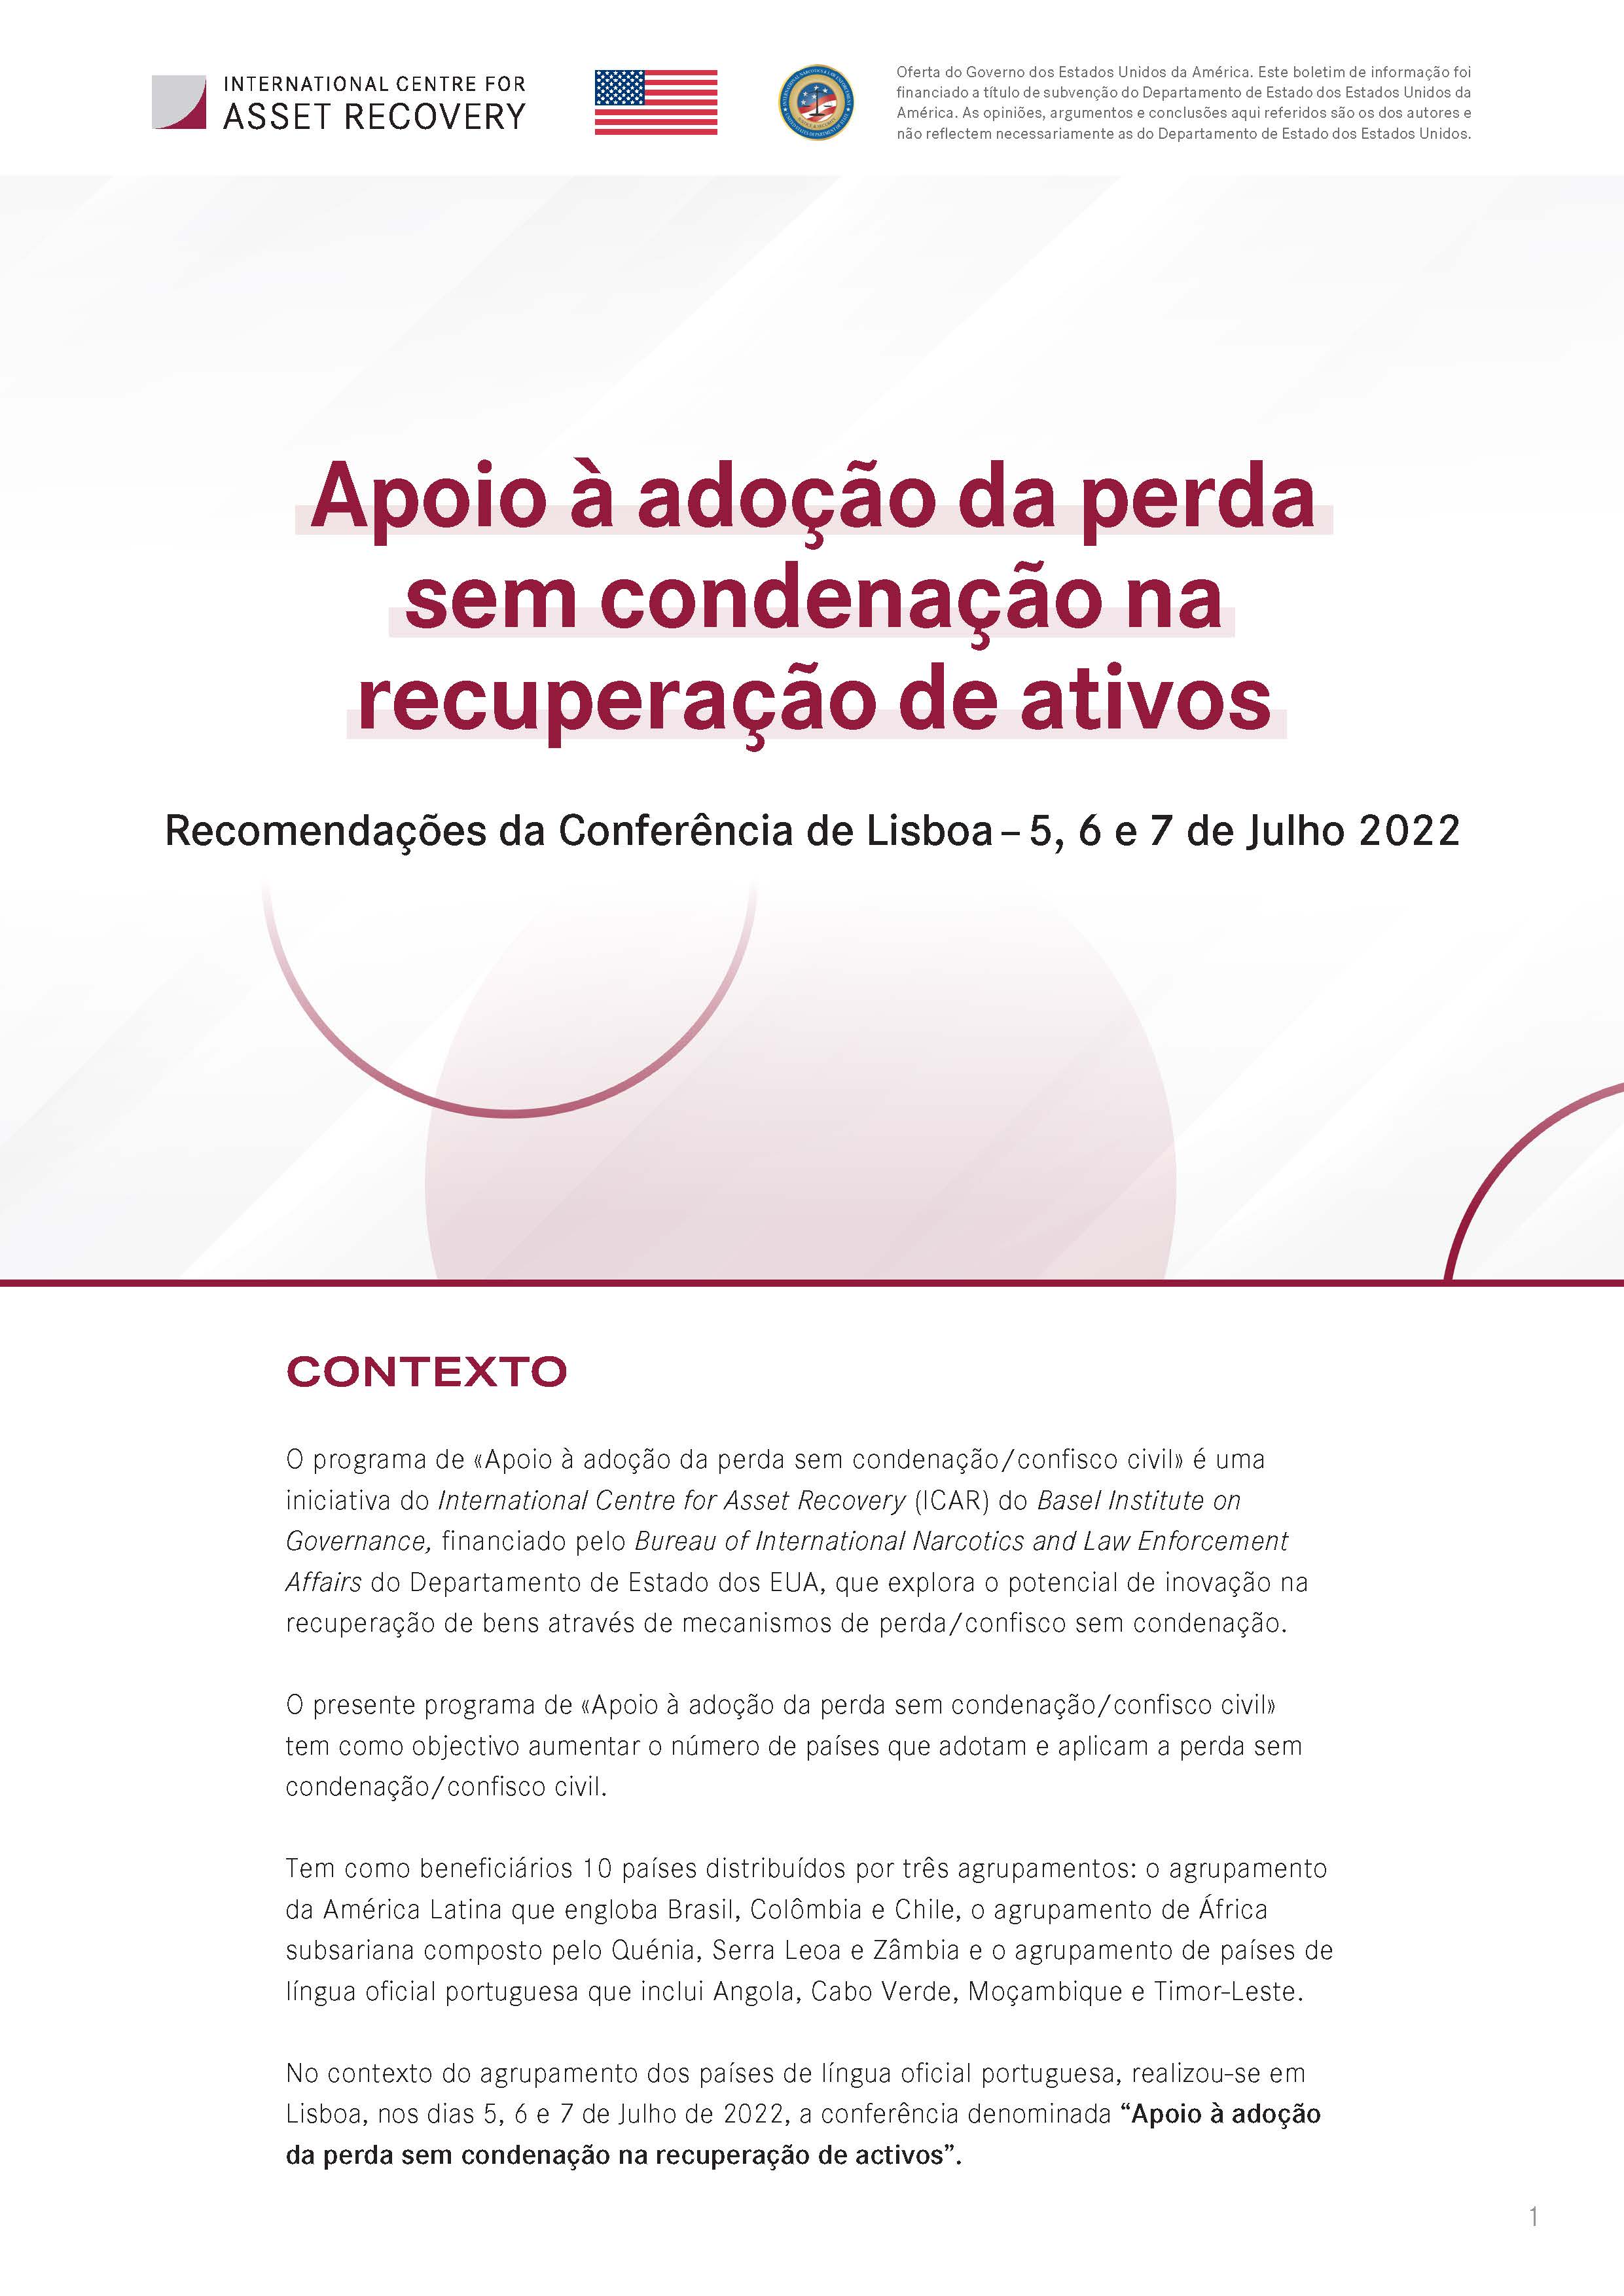 Lisbon Conference recommendations PT